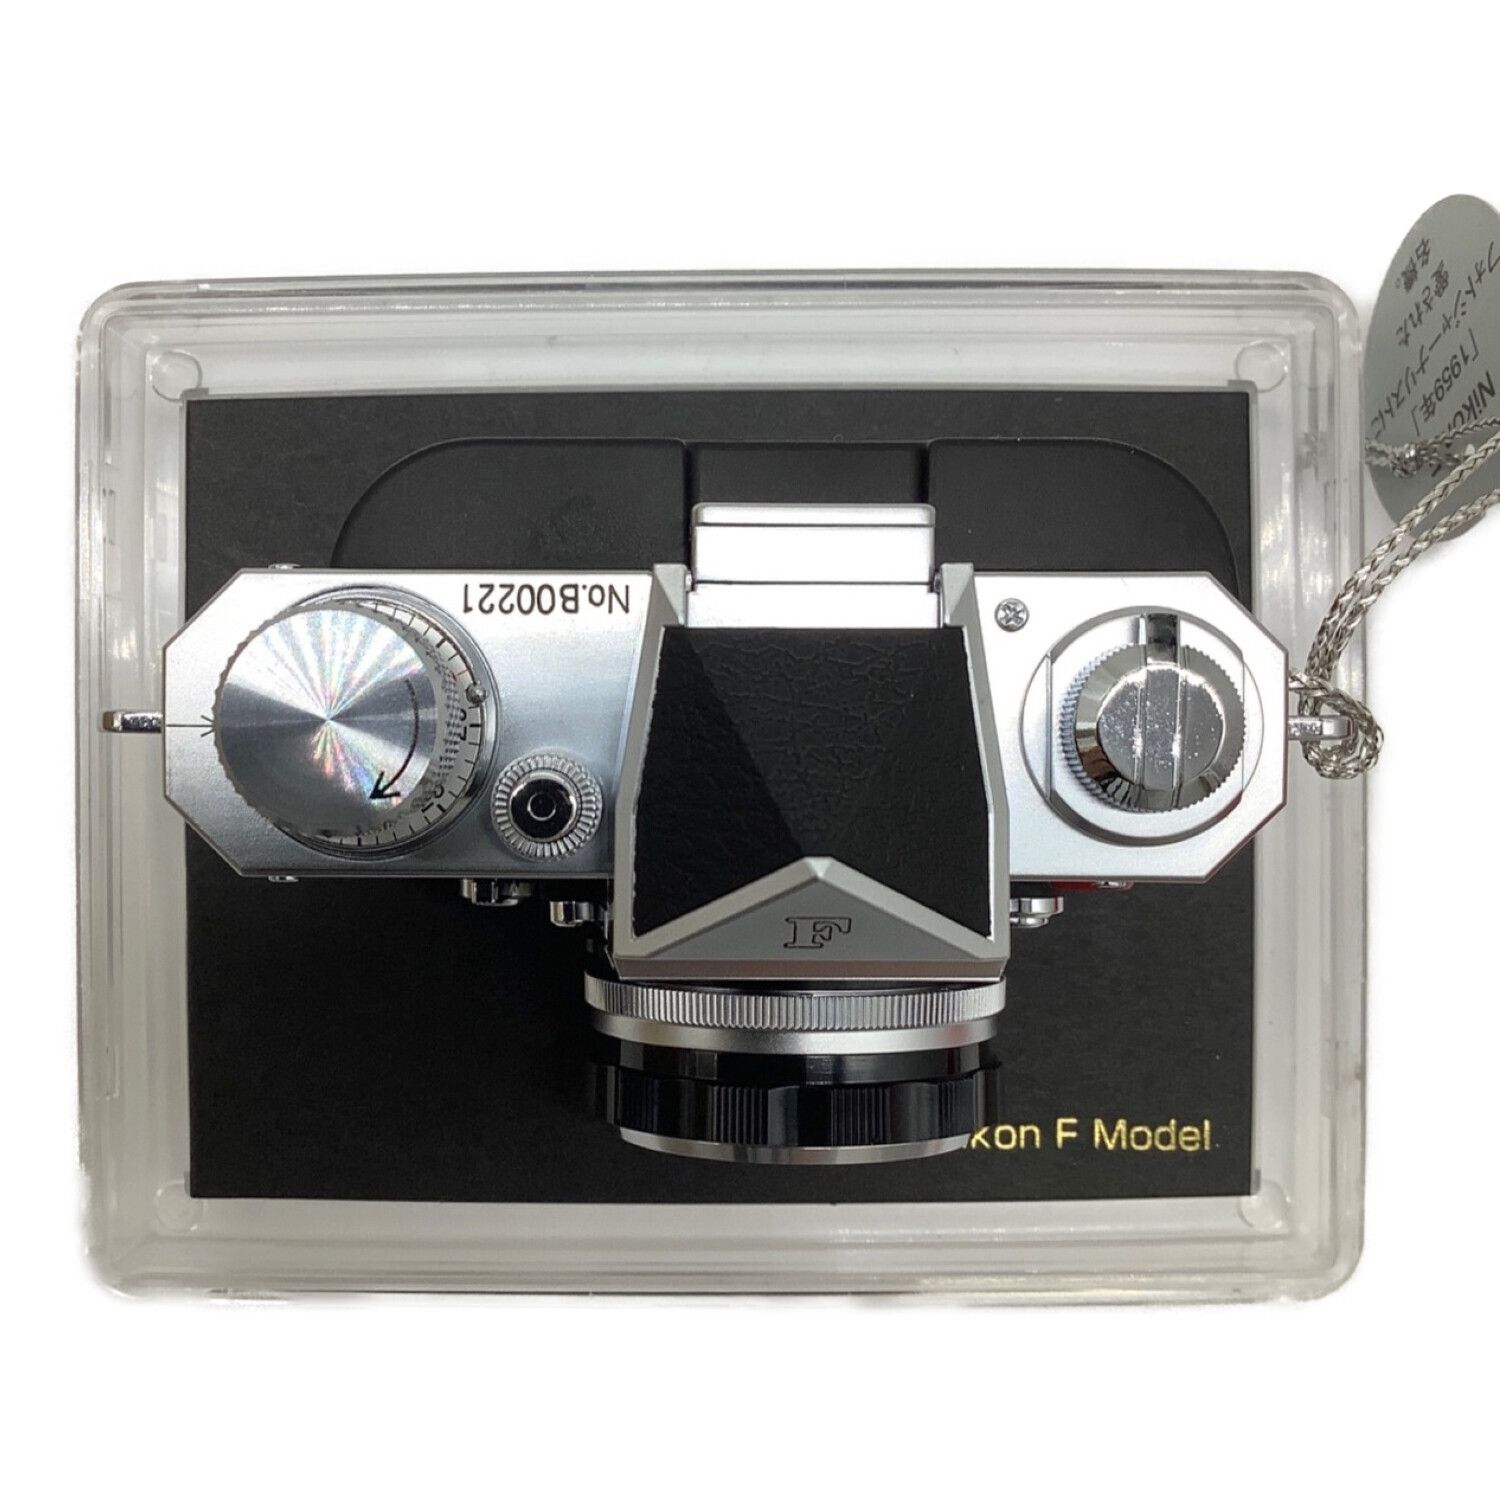 Megahouse (メガハウス) ミニチュアカメラ SHARAN Nikon F Model Mini